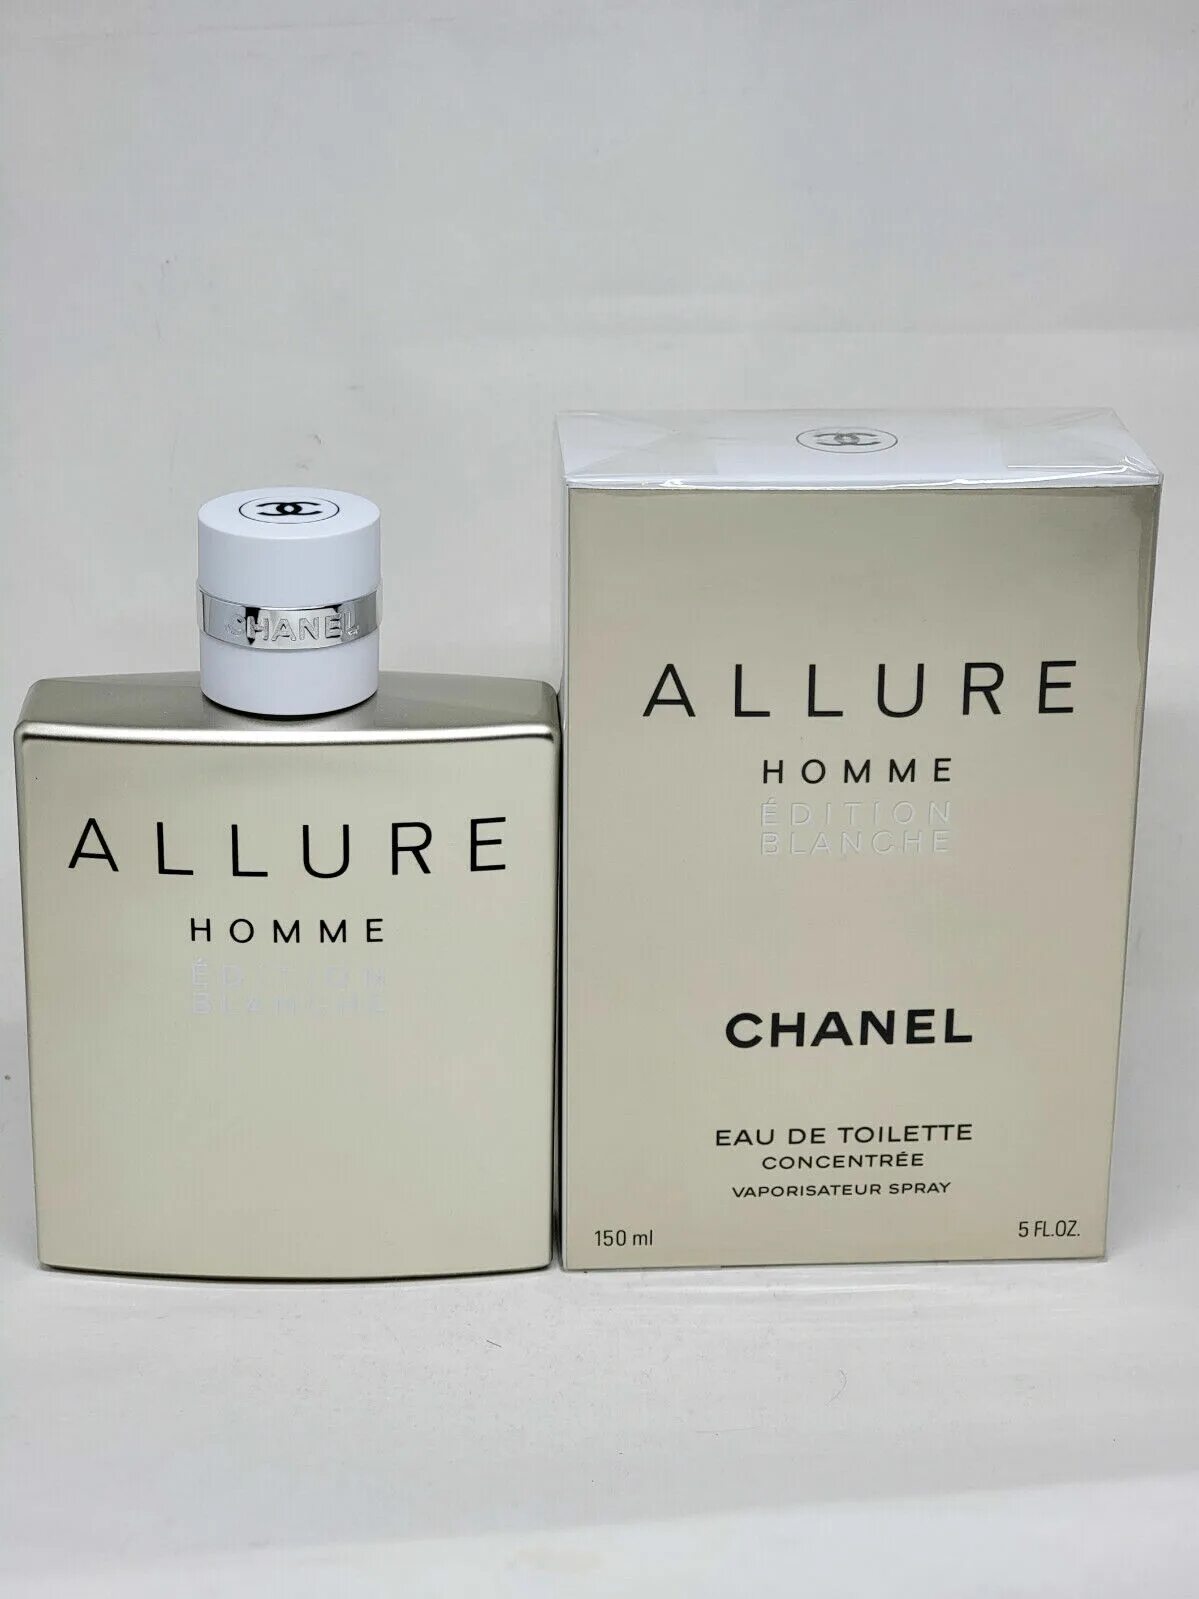 Chanel homme edition. Шанель эдишн Бланш. Chanel Allure homme Sport. Шанель Аллюр хоум. Allure homme Sport Edition Blanche.